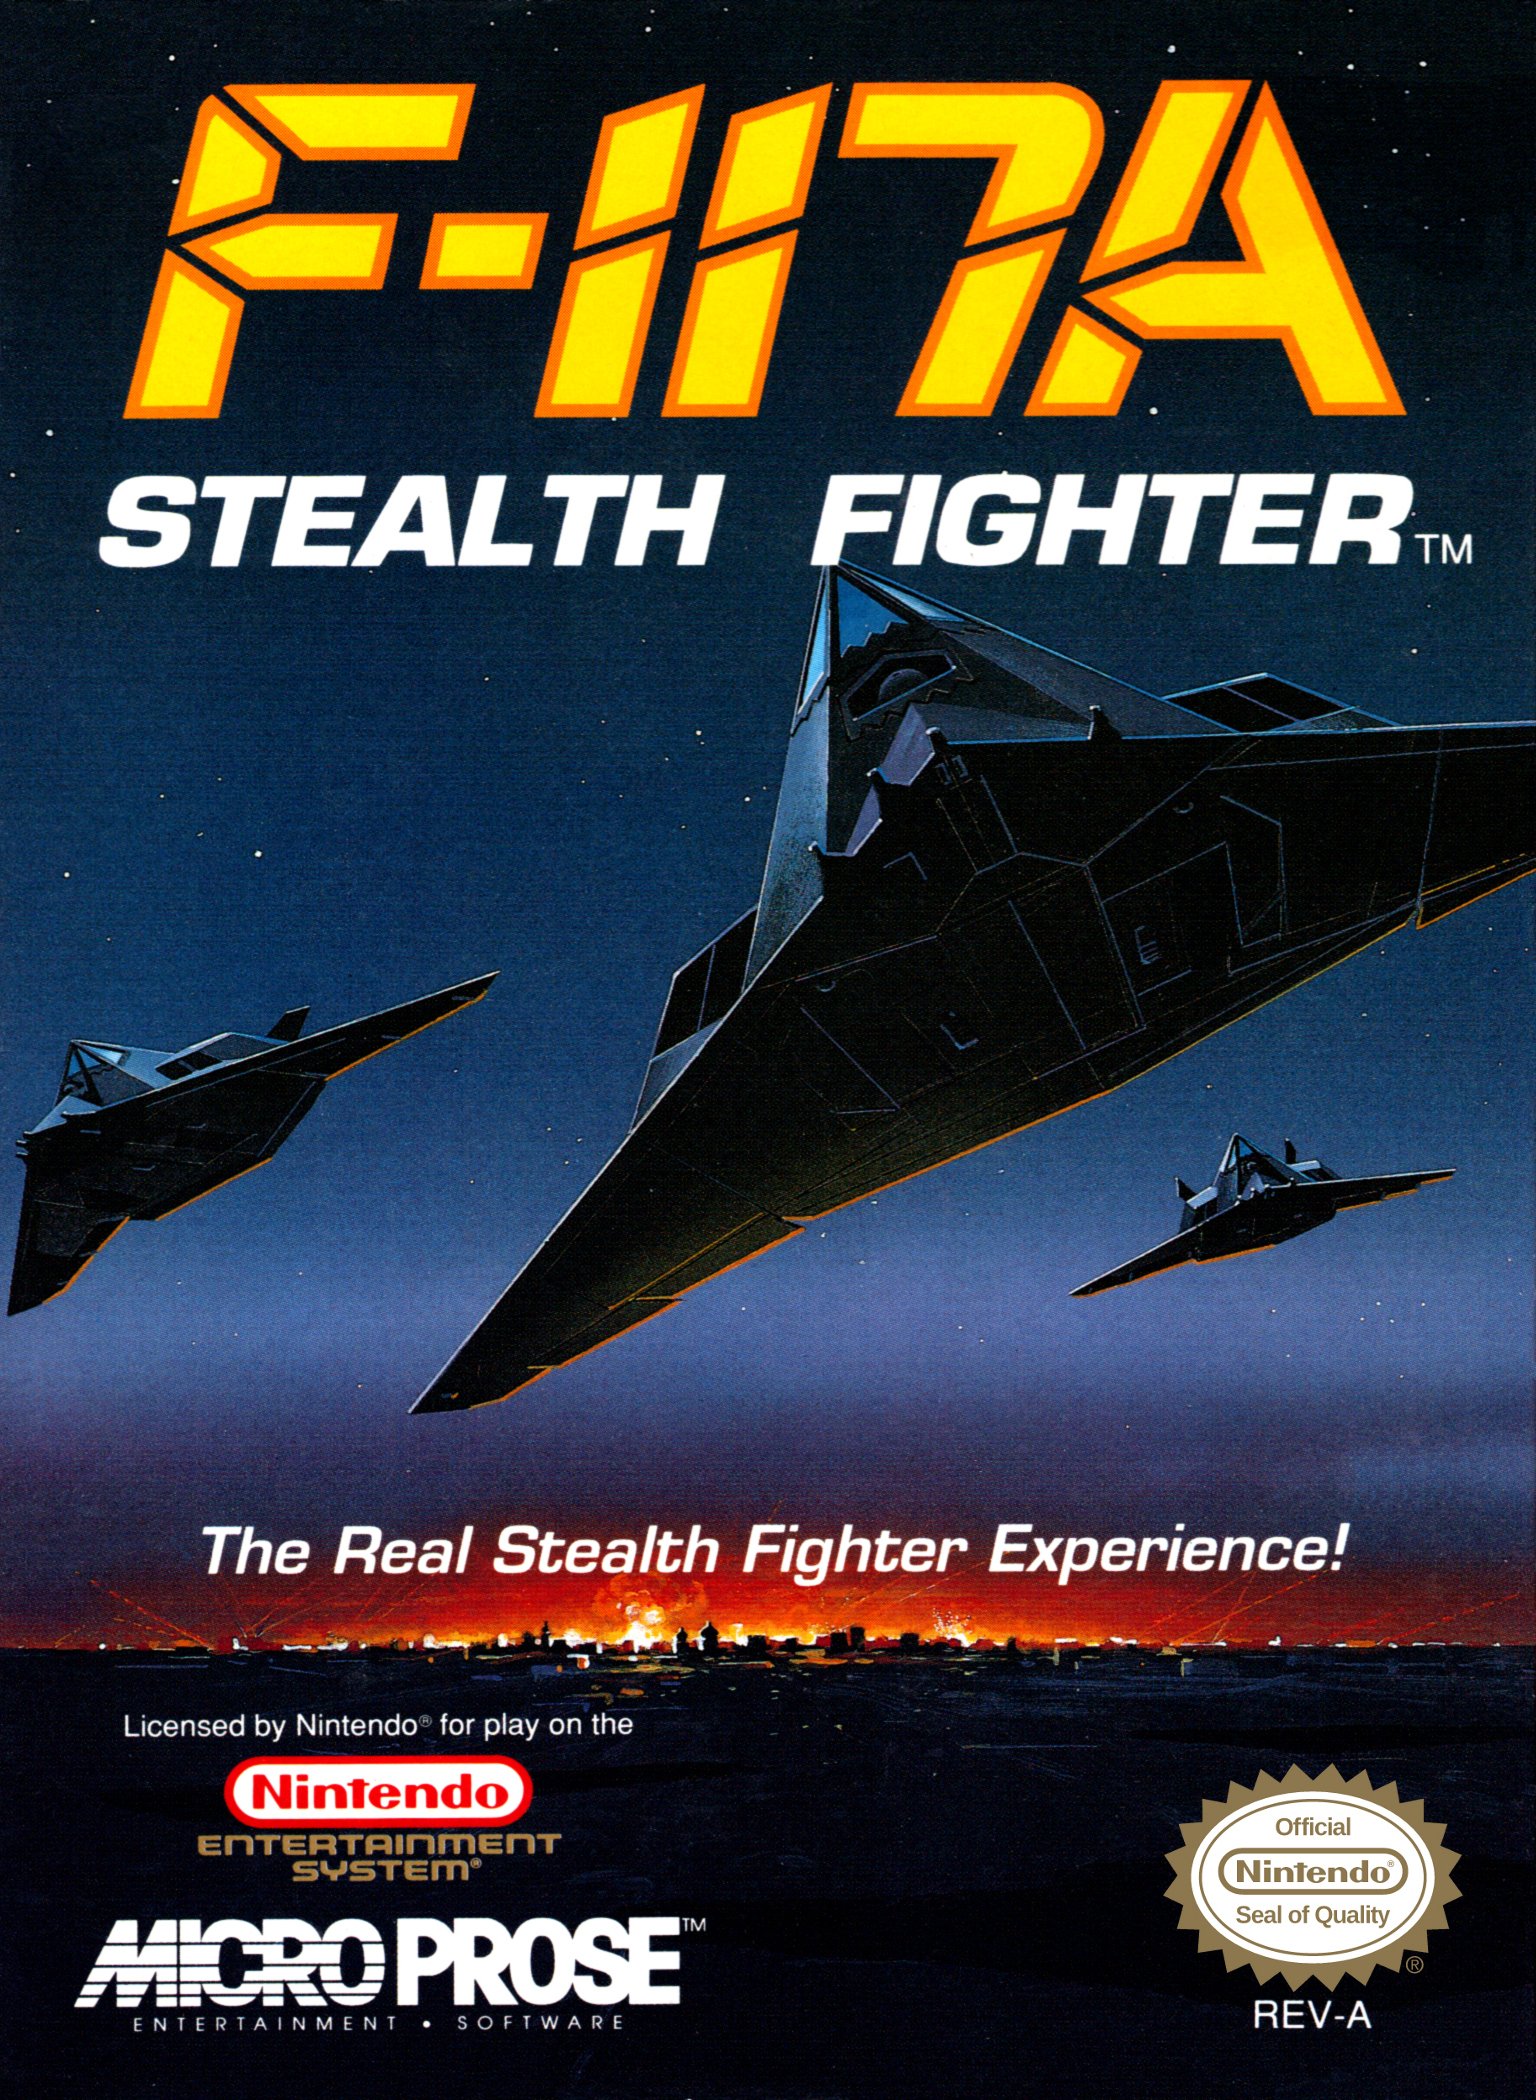 Caratula de F-117A Stealth Fighter para Nintendo (NES)